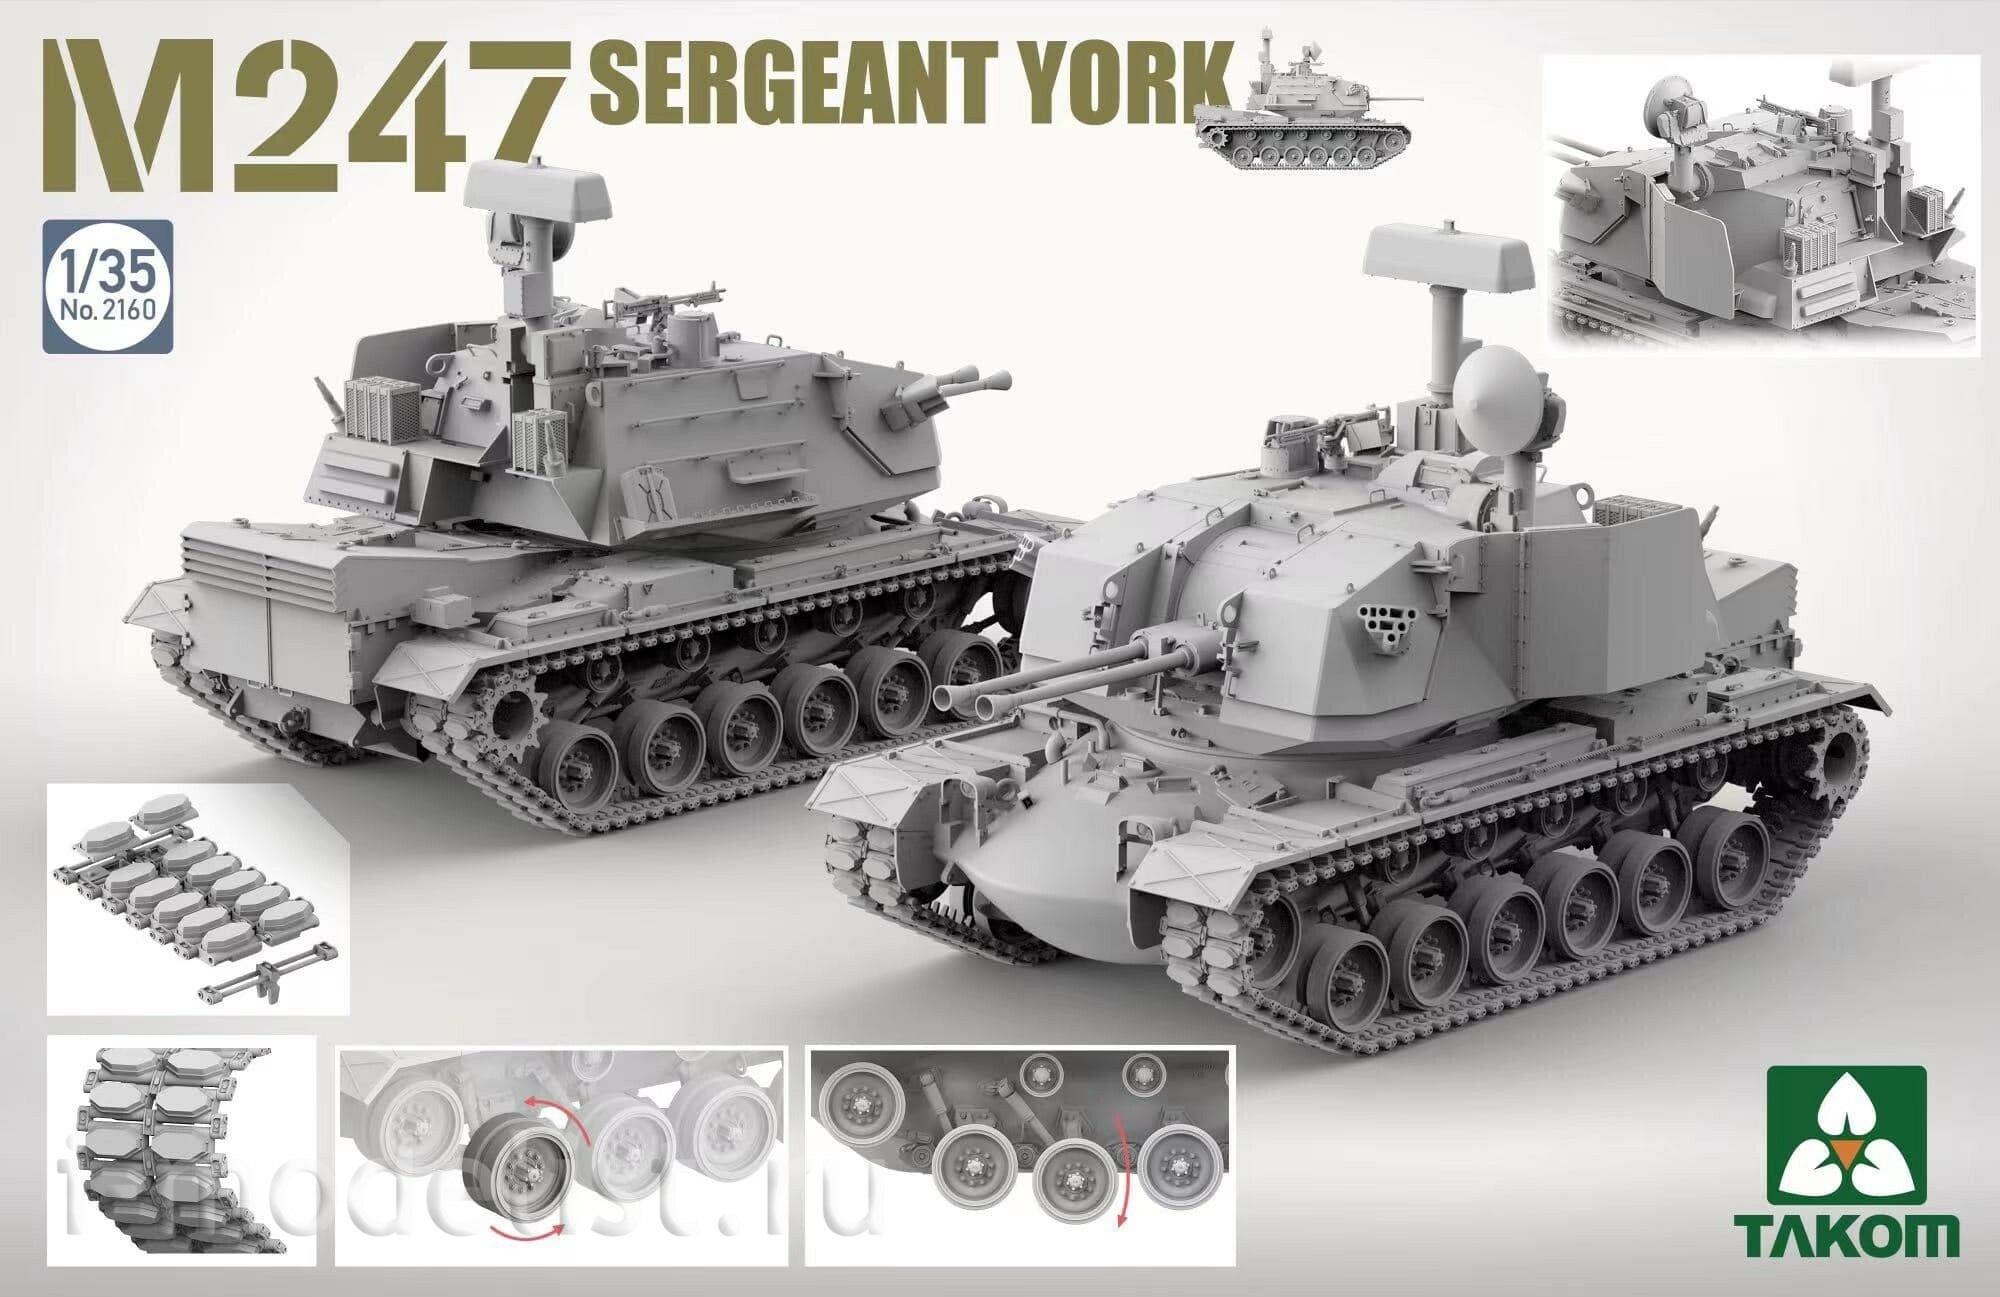 2160 Takom 1/35 M247 Sergeant York